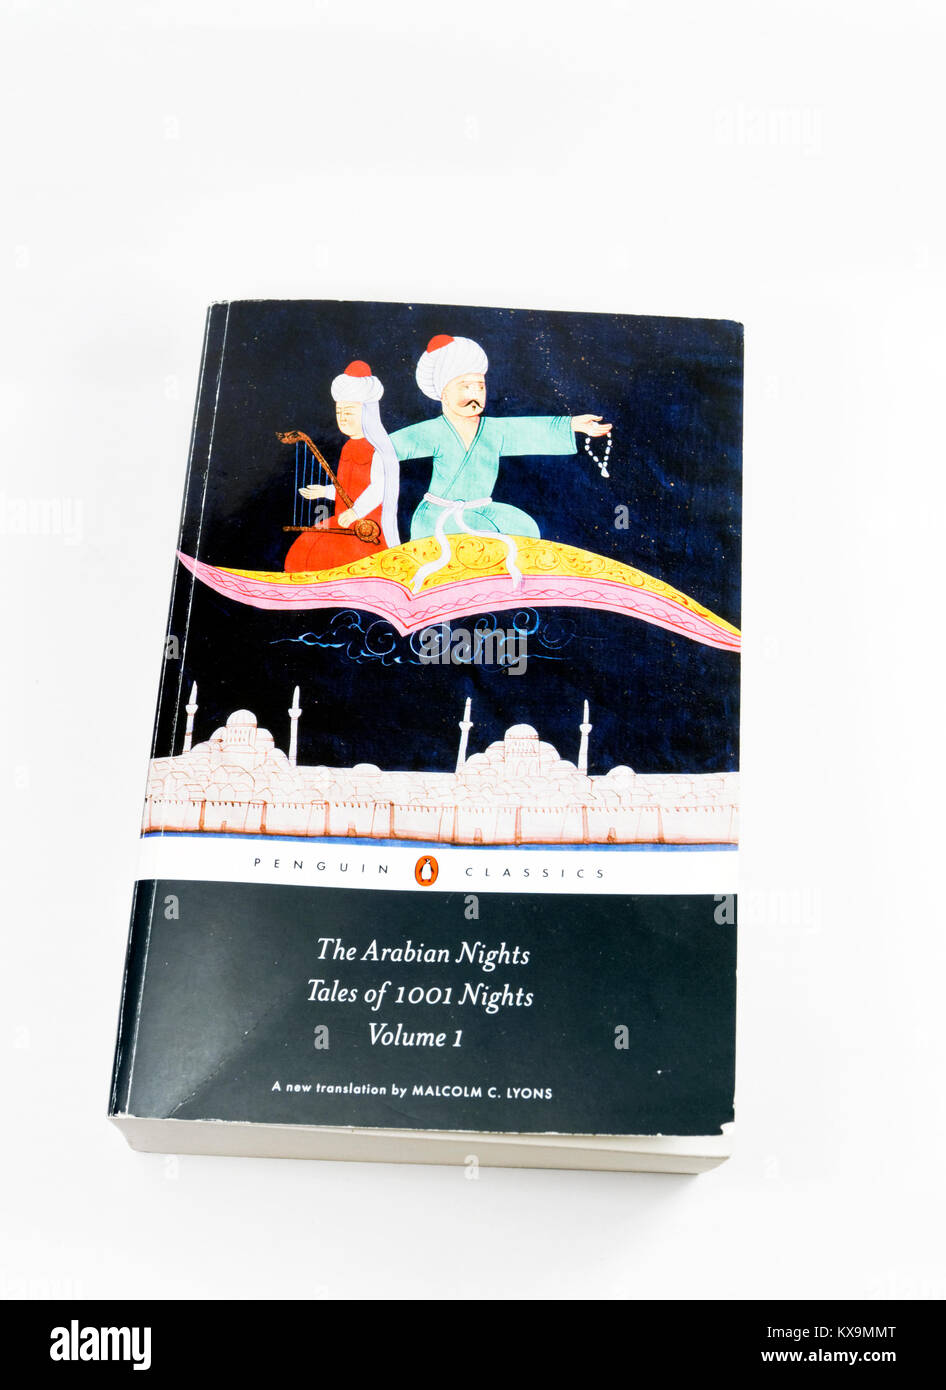 L'Arabian Nights, racconti di 1001 notti, volume 1, Penguin Classics prenota. Foto Stock